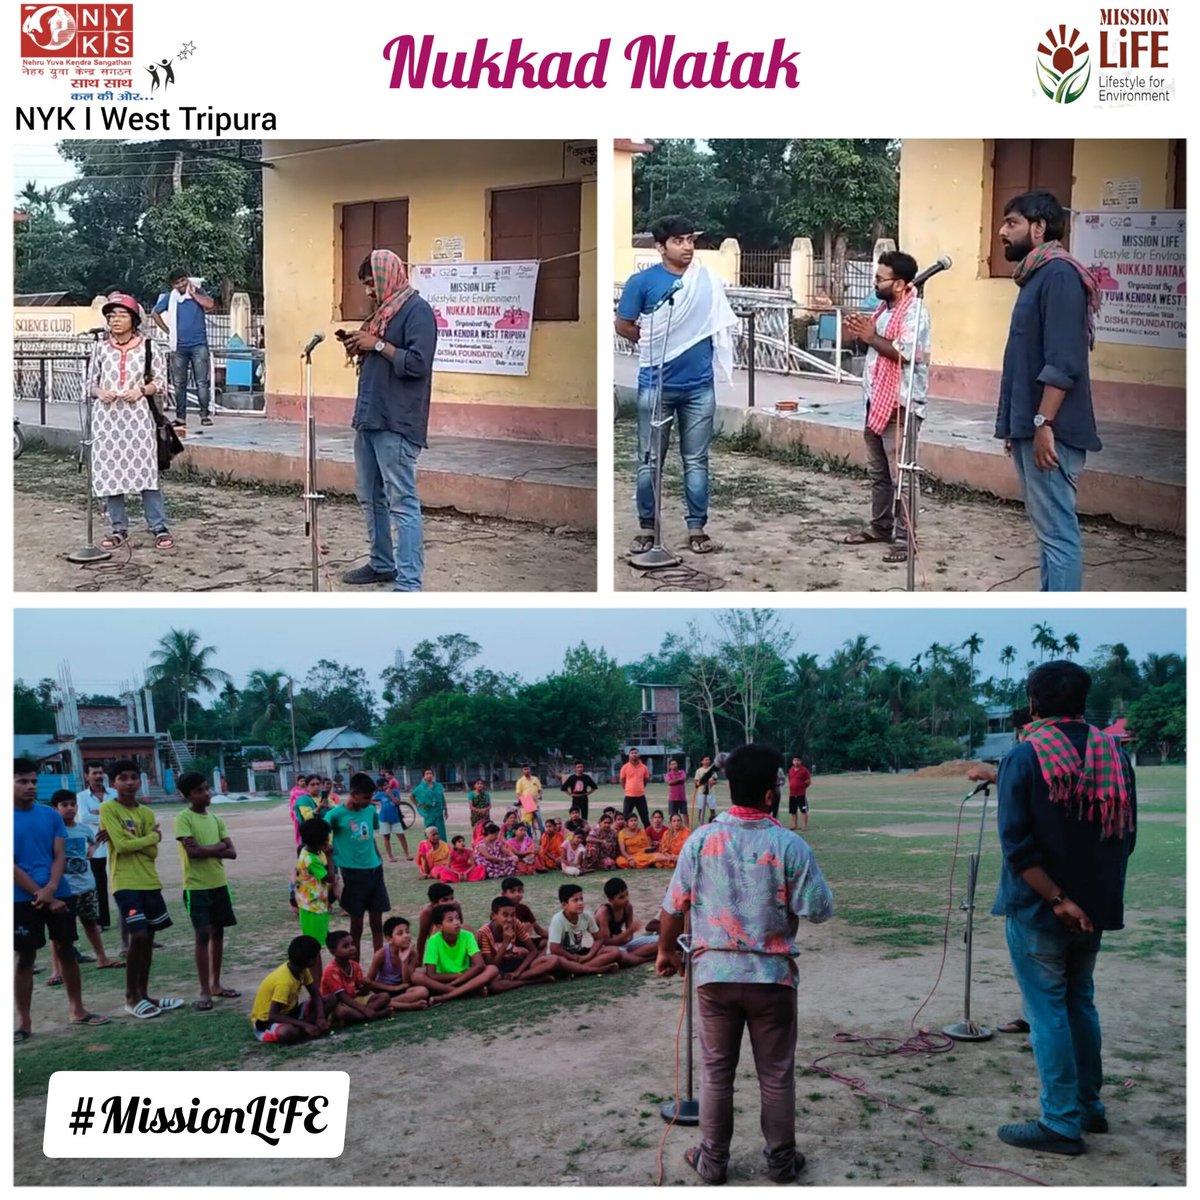 A Nukkad Natak was organized by @NykwestTripura In Collaboration with Disha Foundation alongwith disemination of info about #MissionLiFE organized under #ChooseLiFE #lifestyleforenvironment
@Nyksindia
@ianuragthakur
@tinkuroybjp
@NYKS_Tripura